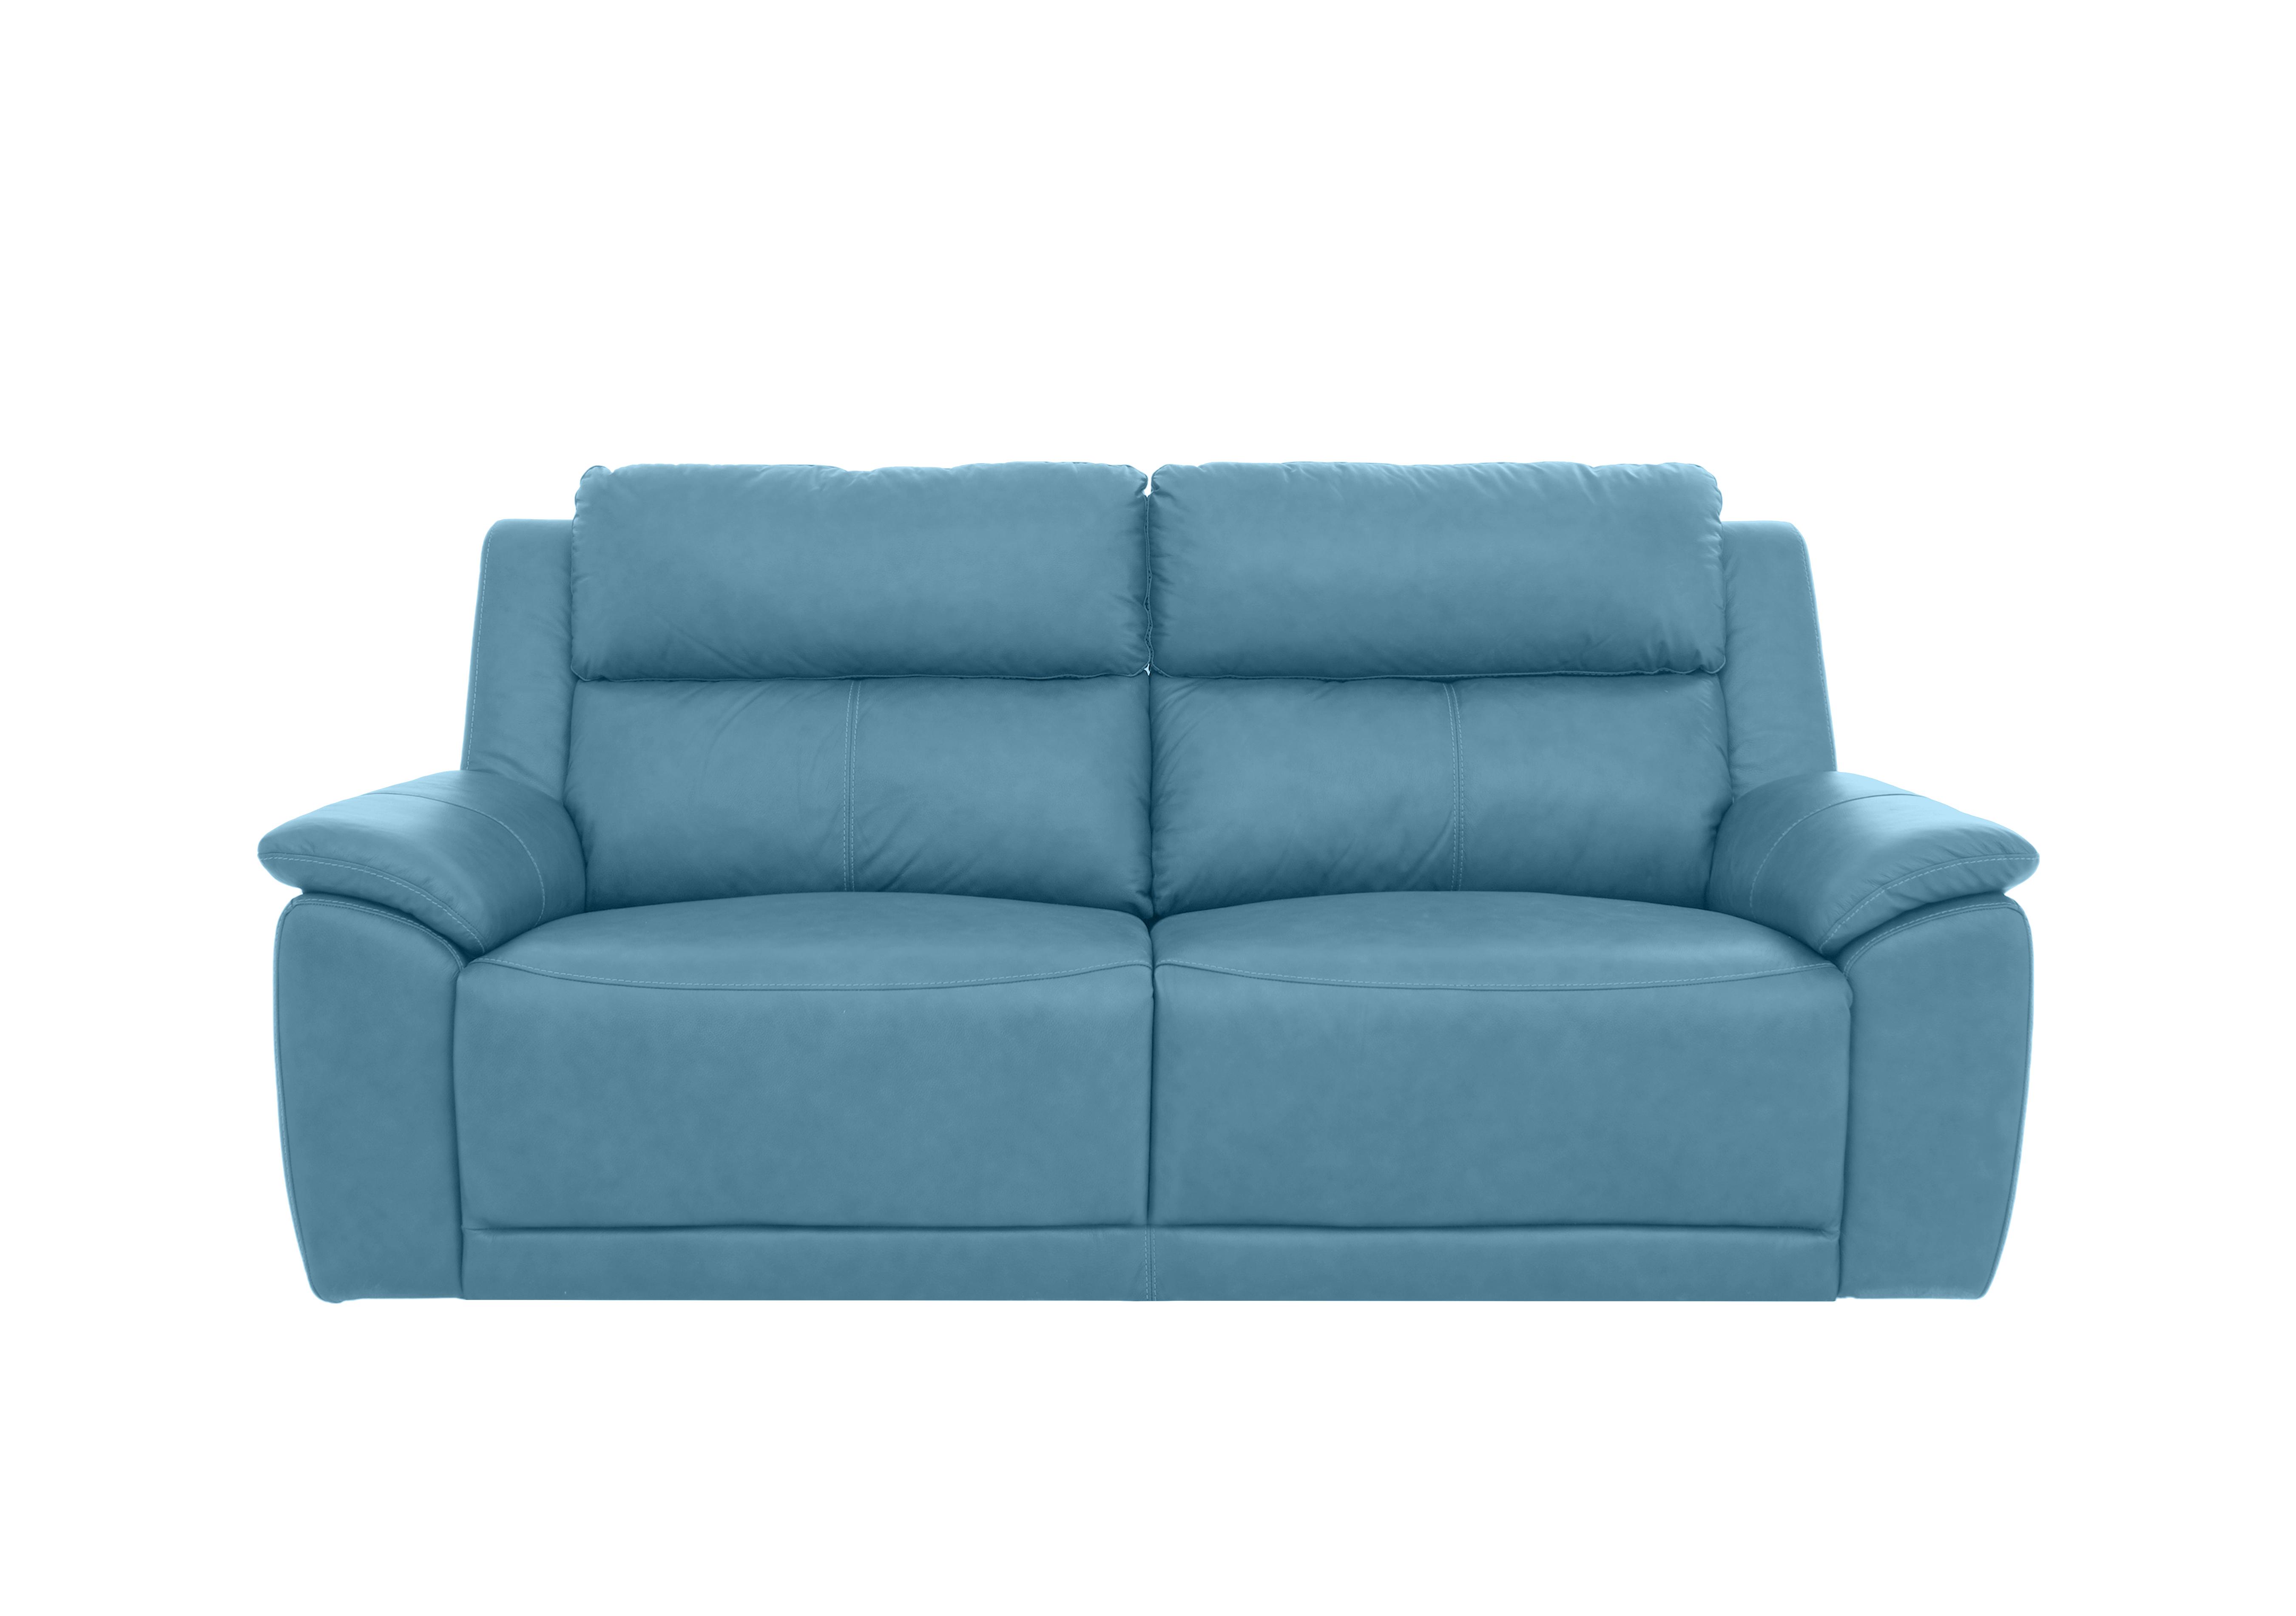 Utah 3 Seater Leather Sofa in Blu Le-9312 on Furniture Village